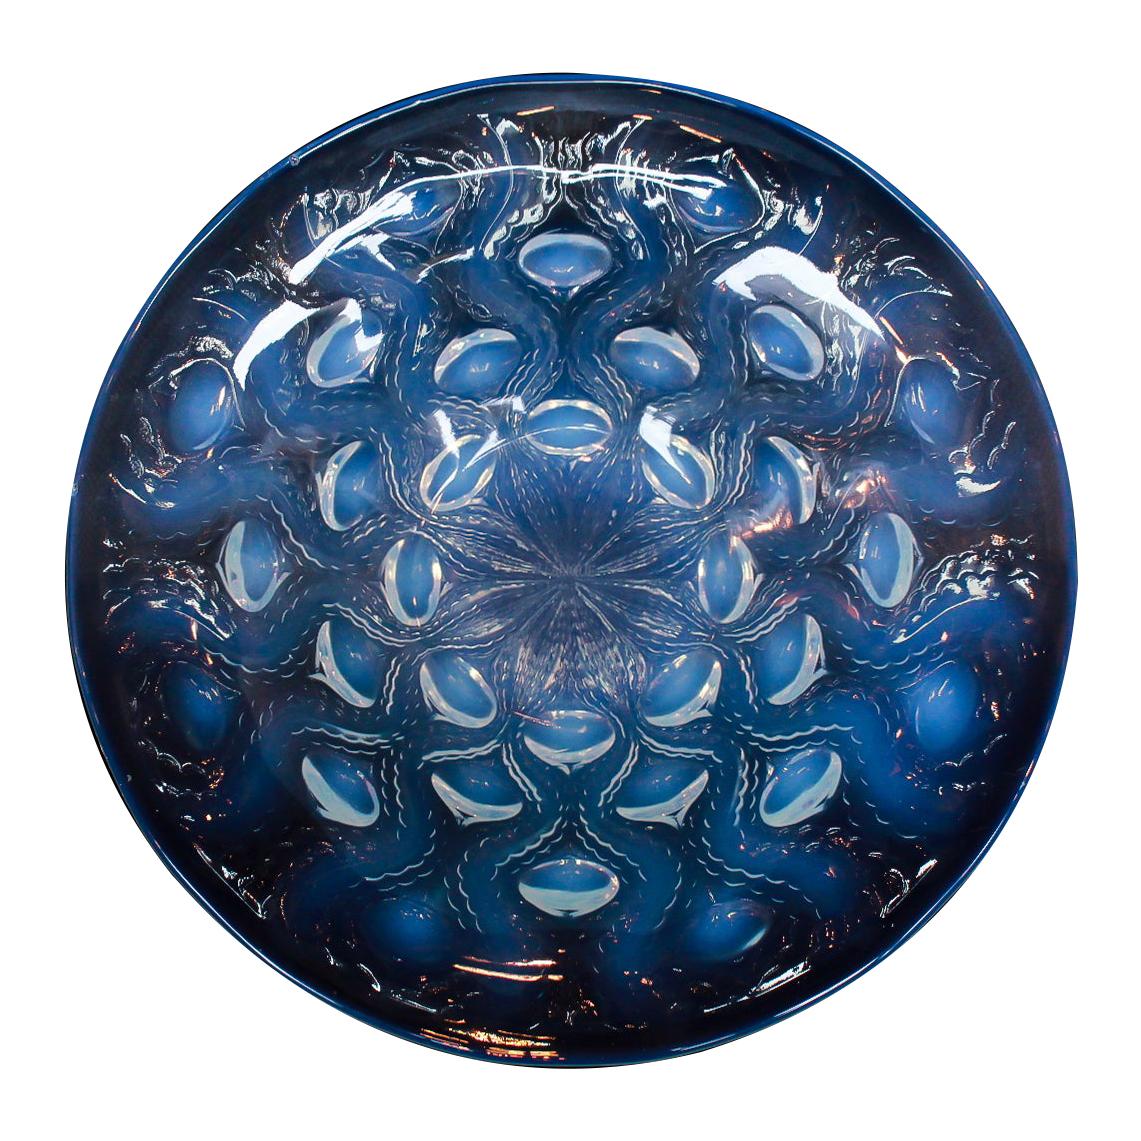 "Bulbes Coupe No.2" by René Lalique Opalescent lie frosted glass bowl. 